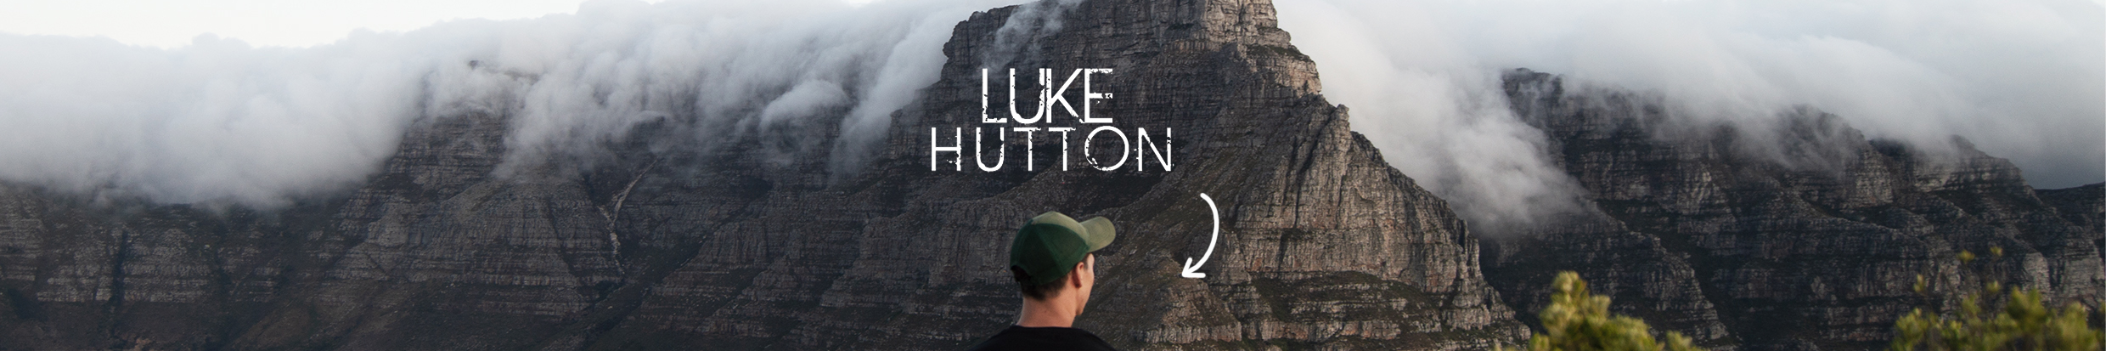 Luke Hutton